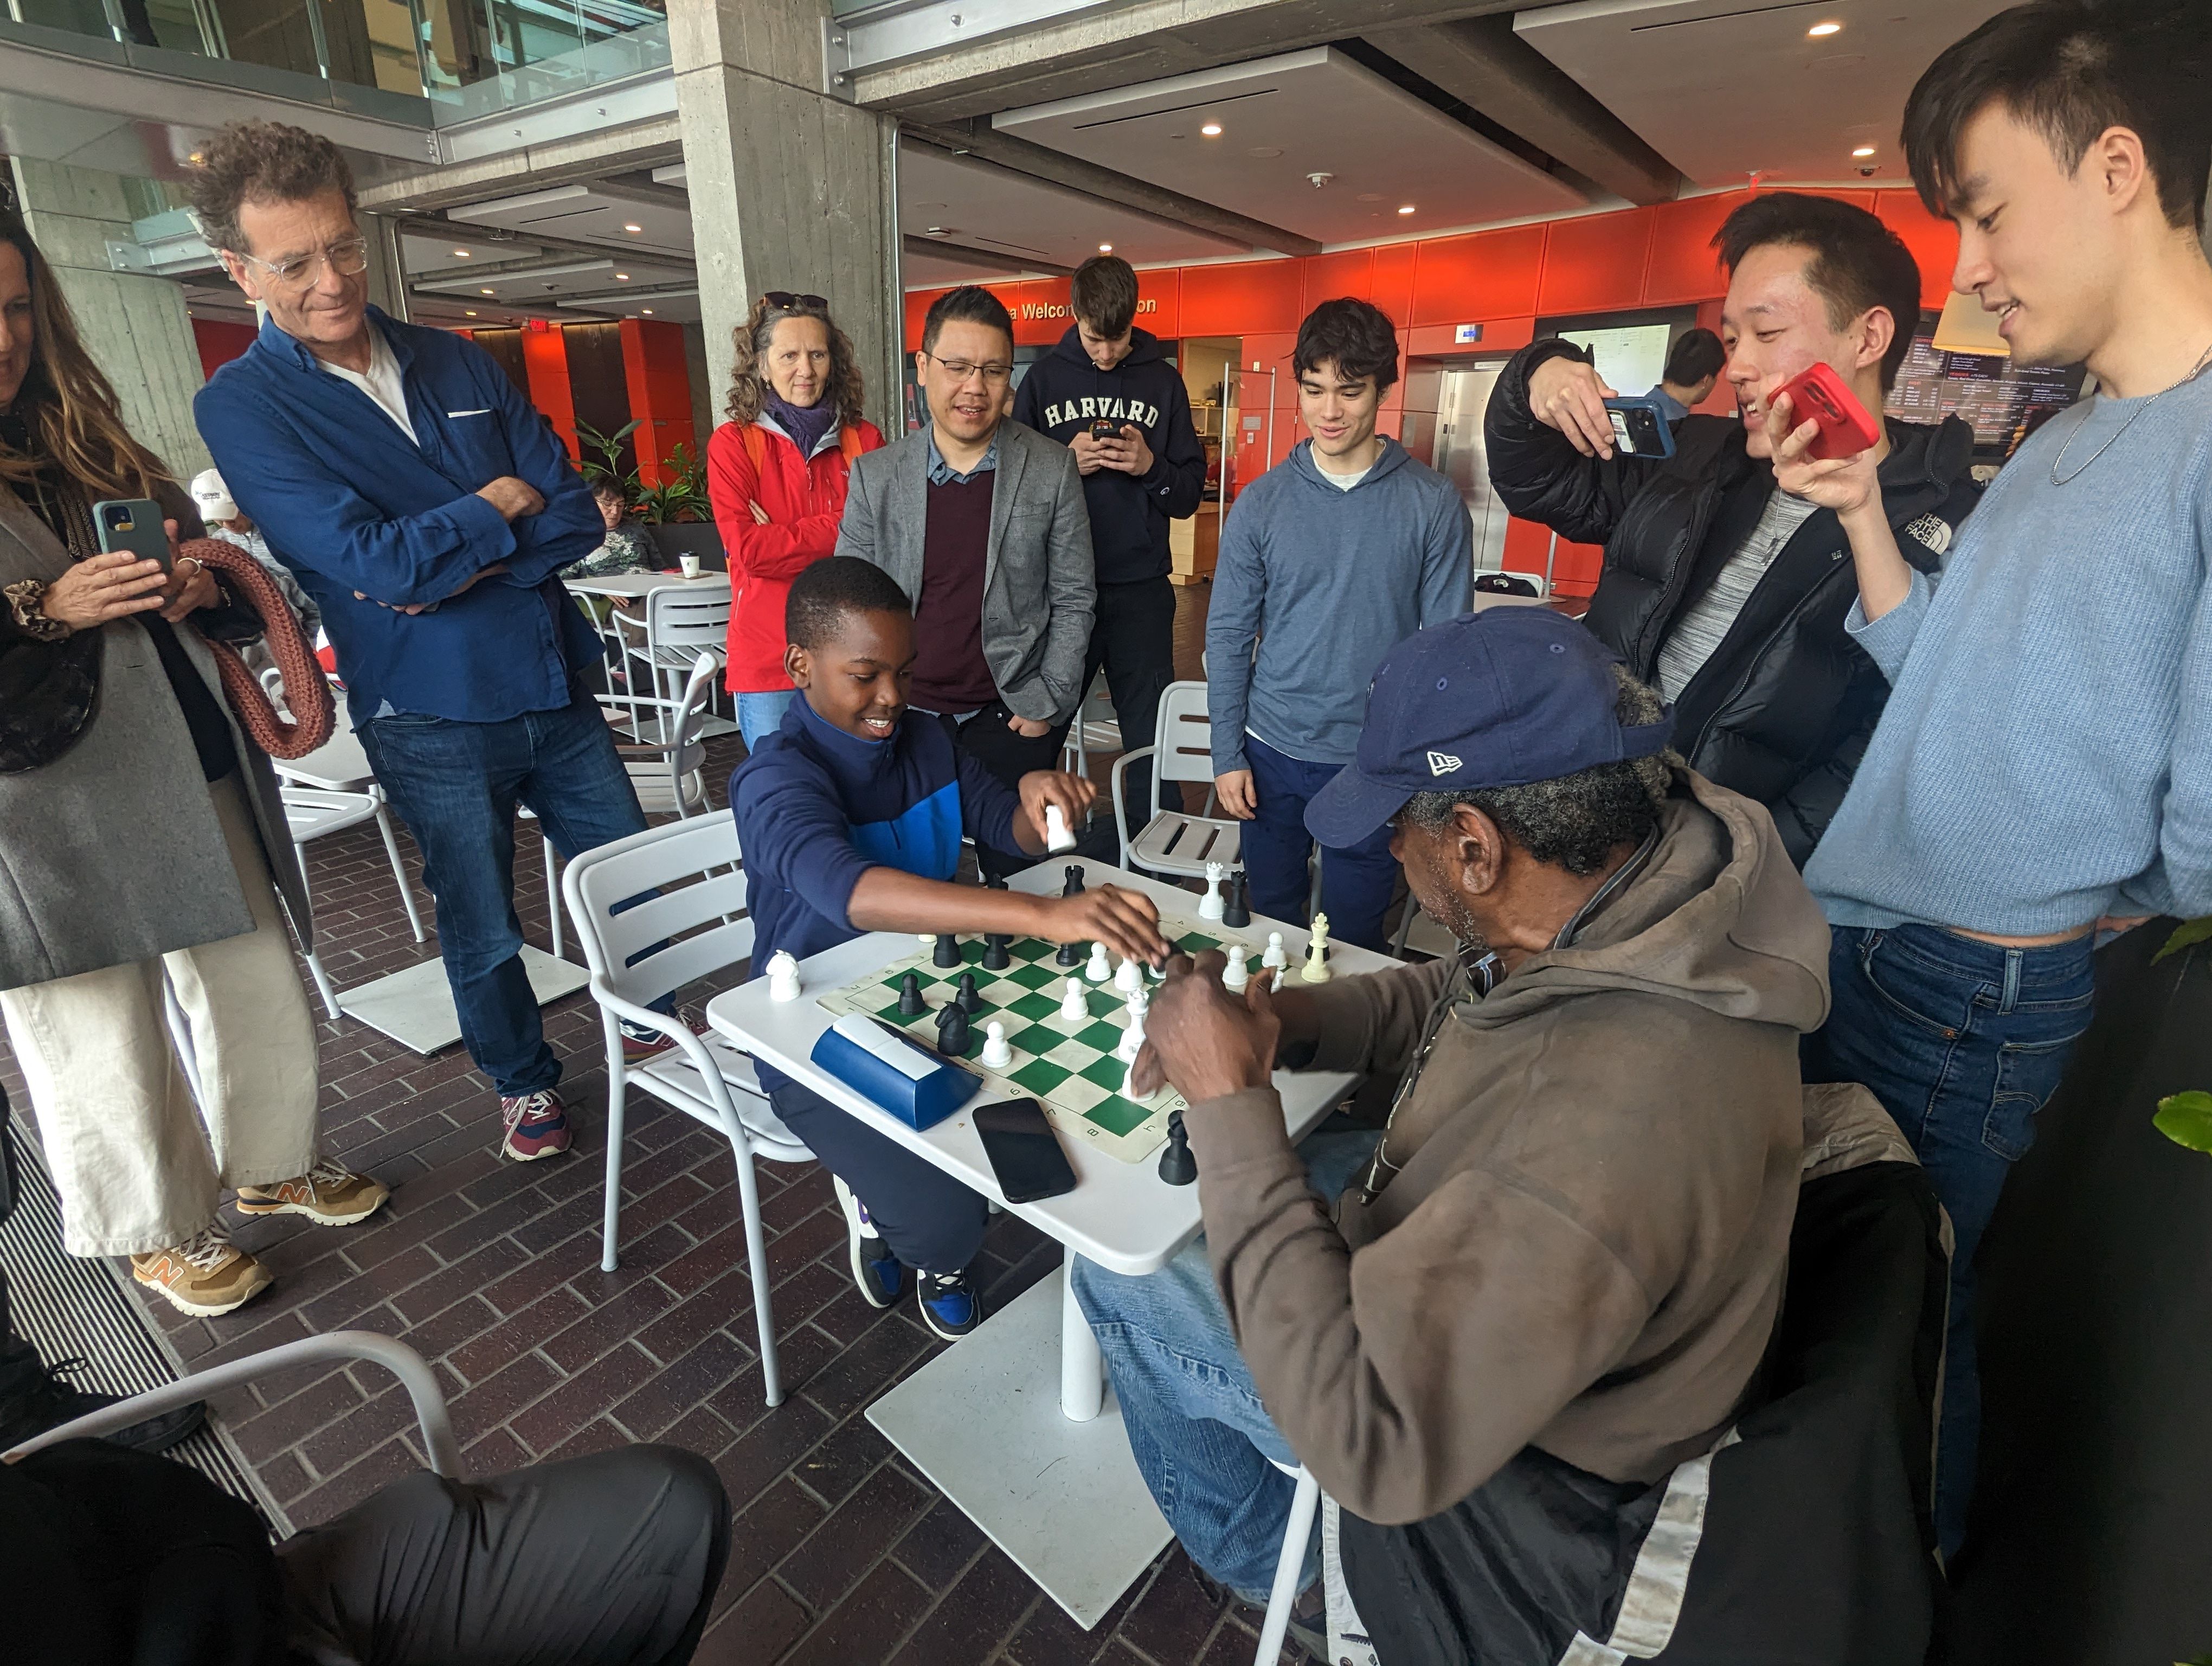 NYC - Checkmate, Like basketball, chess hustling is a city …